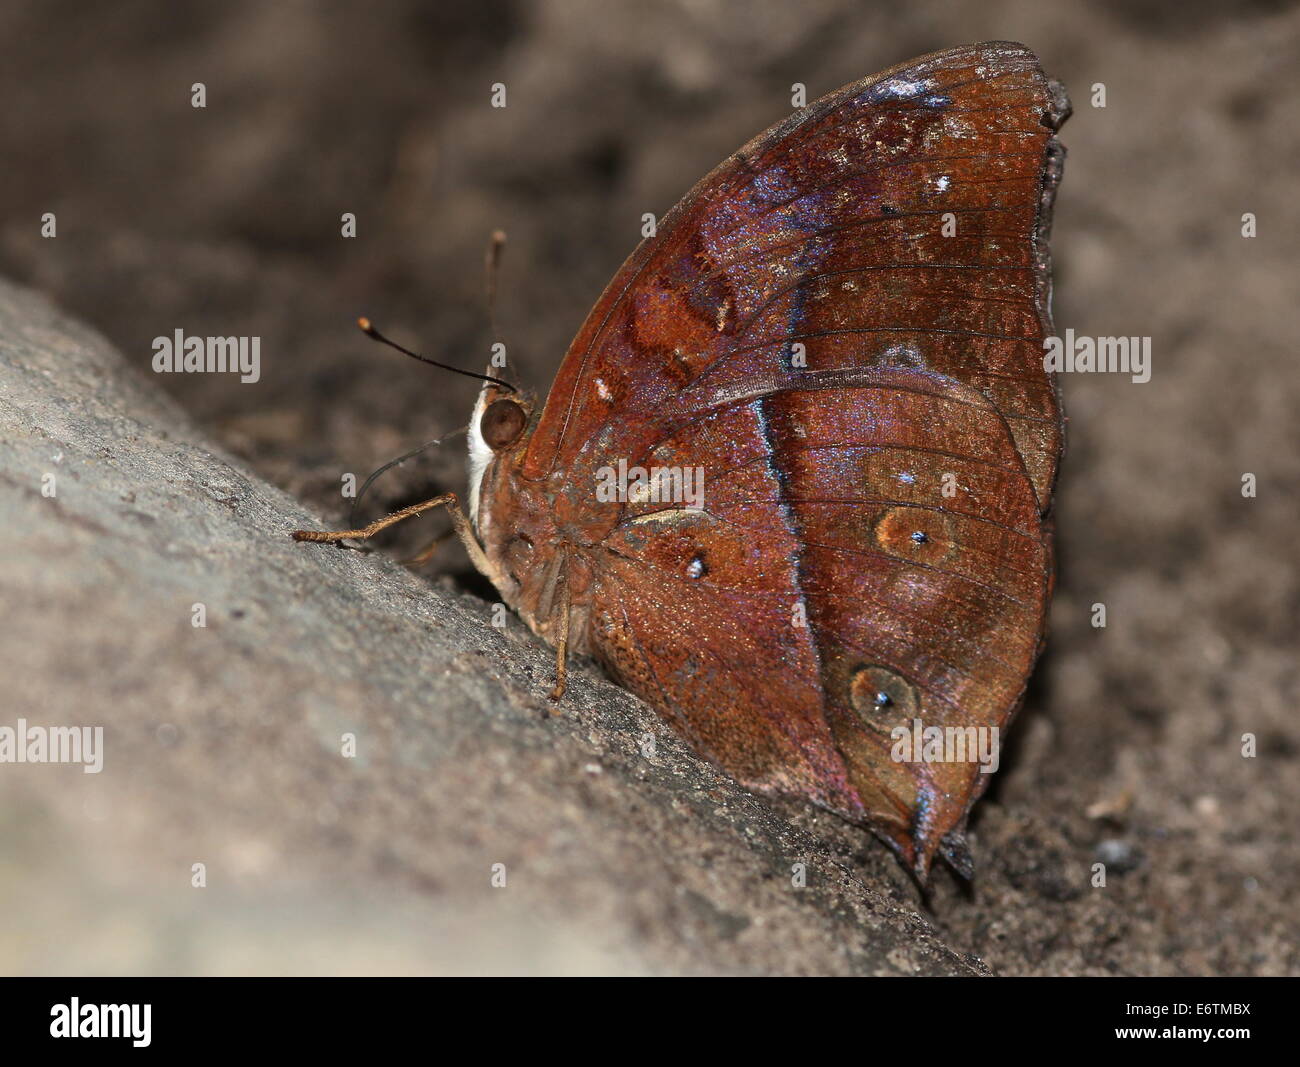 Asian Autumn Leaf a.k.a. (Australian) Leafwing butterfly (Doleschallia bisaltide), seen in profile Stock Photo